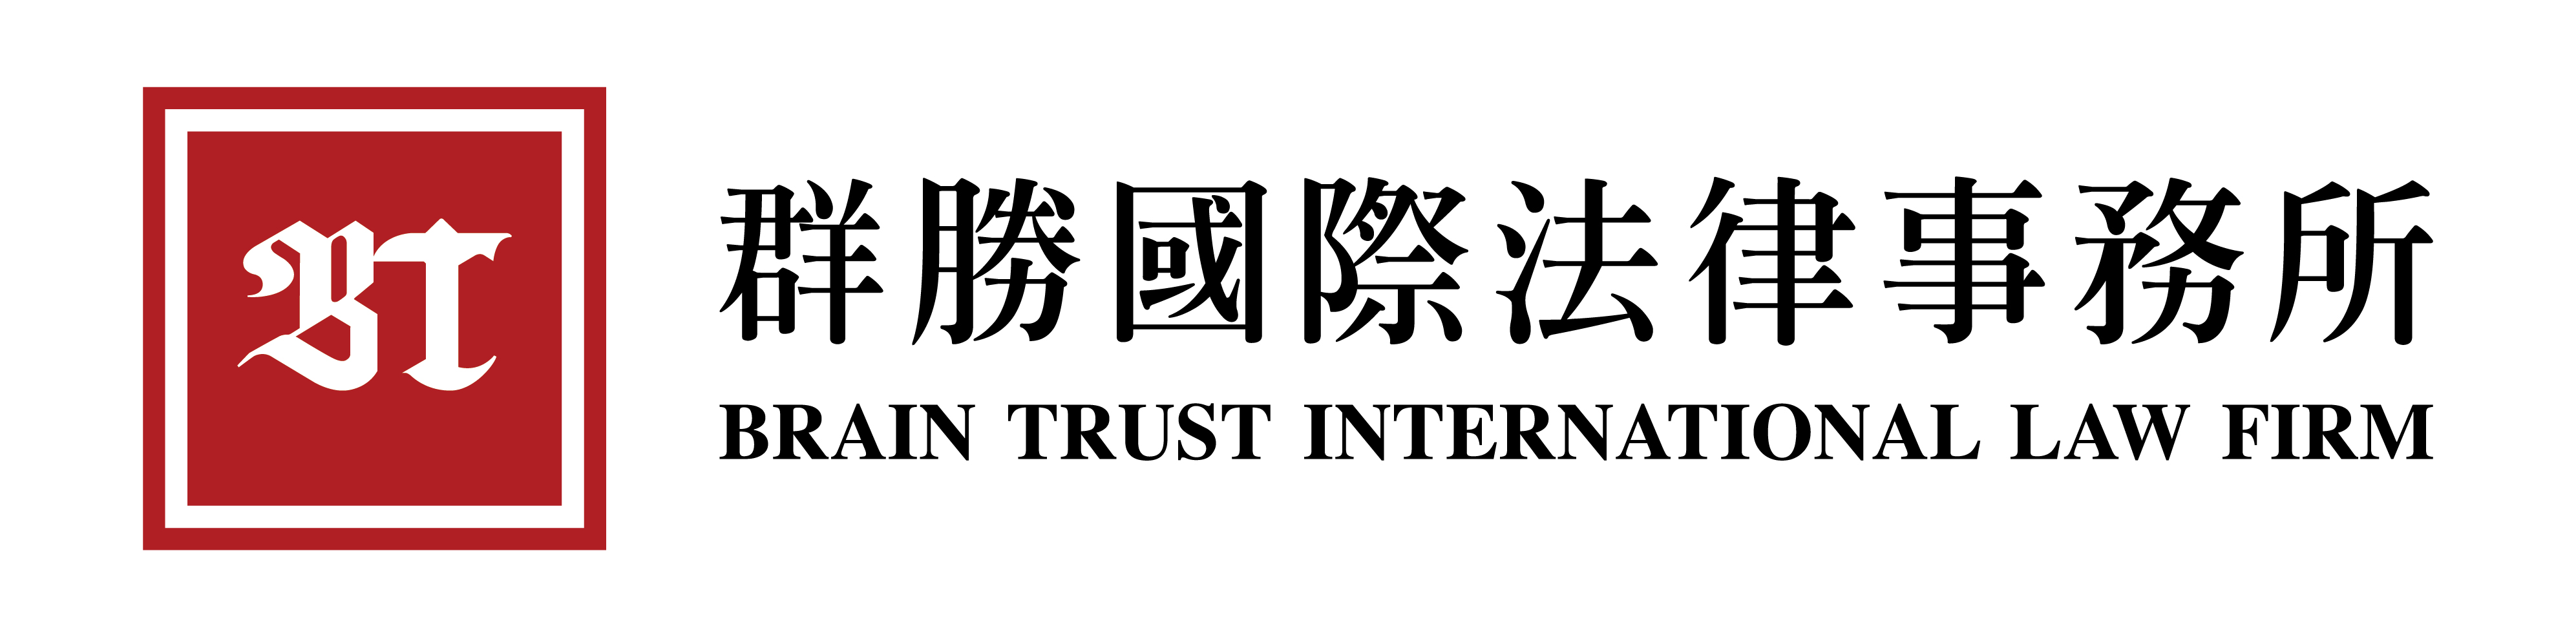 Brain Trust International Law Firm logo